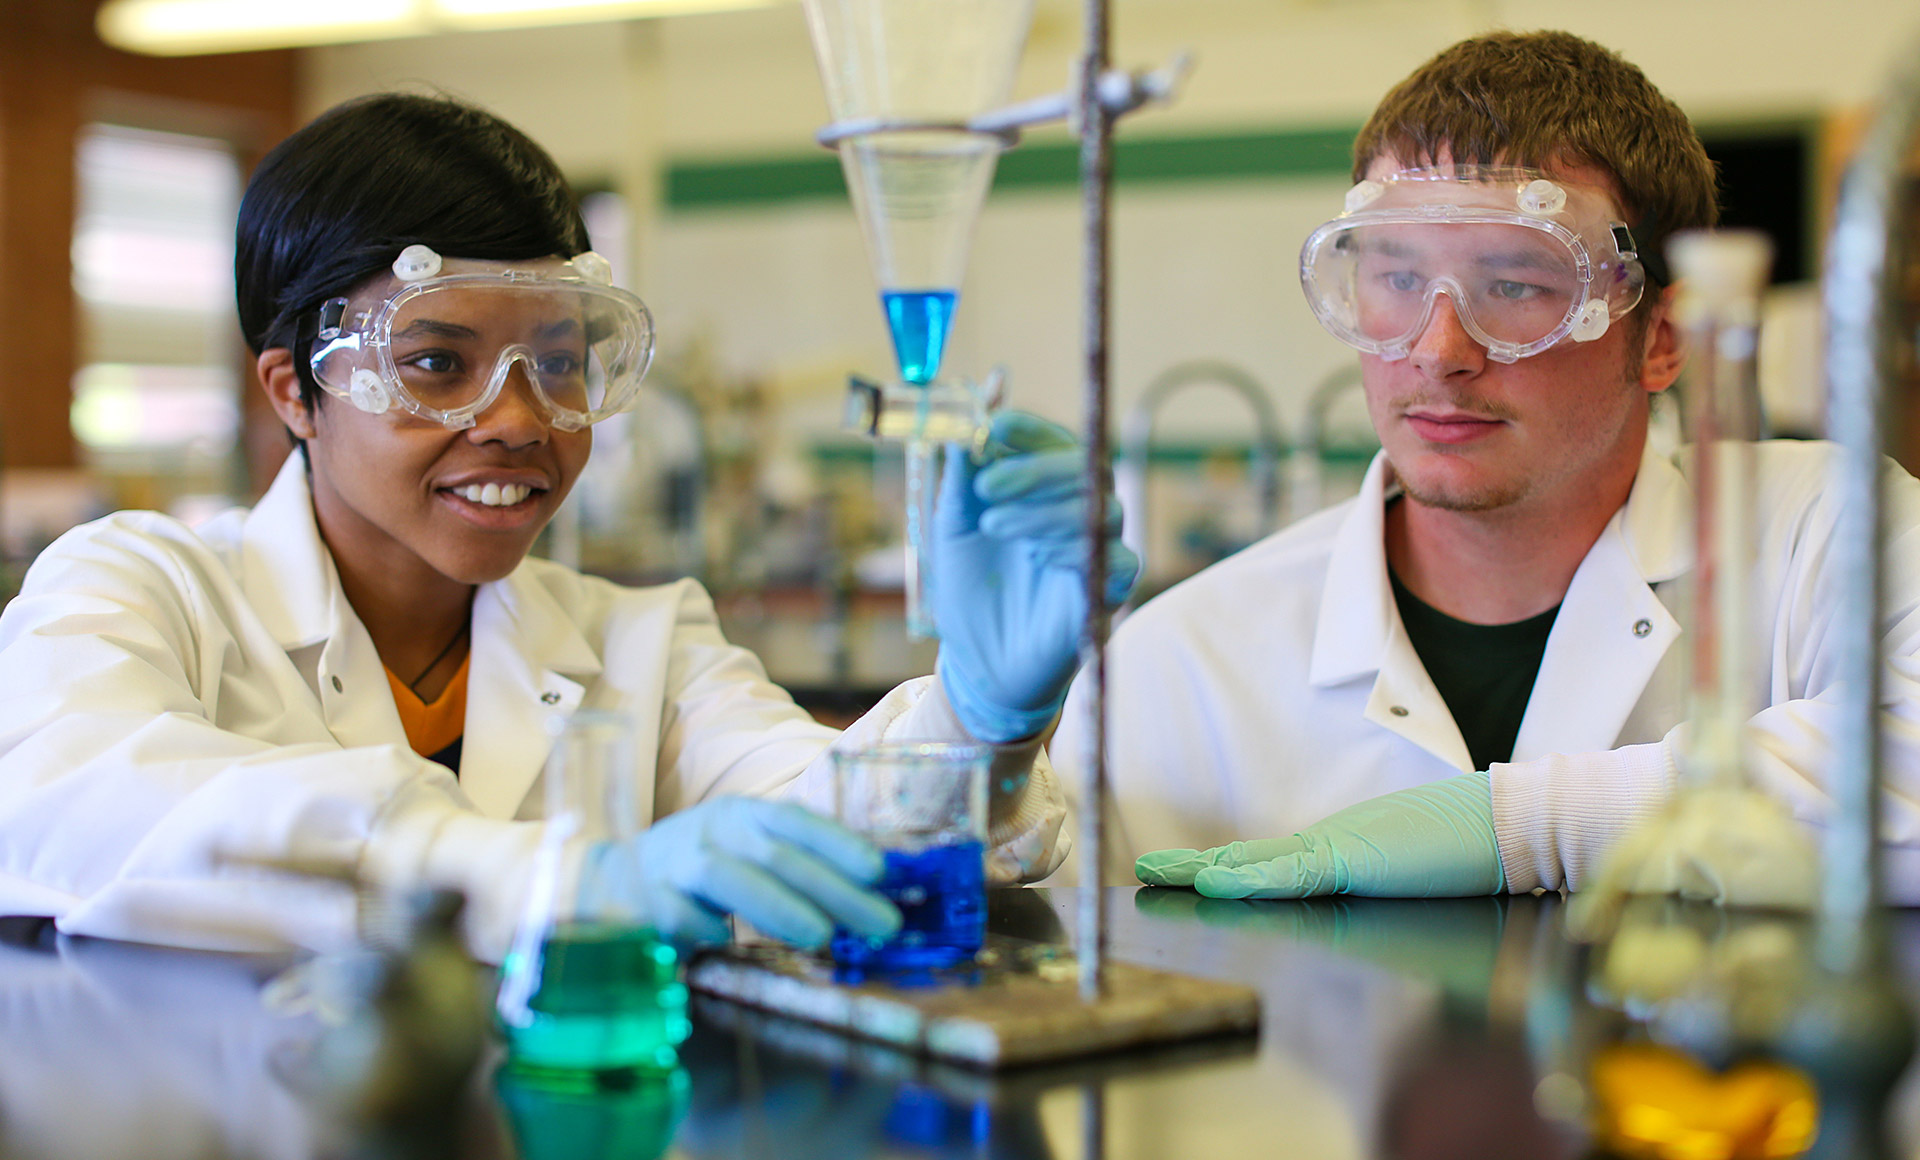 students doing scientific experiments